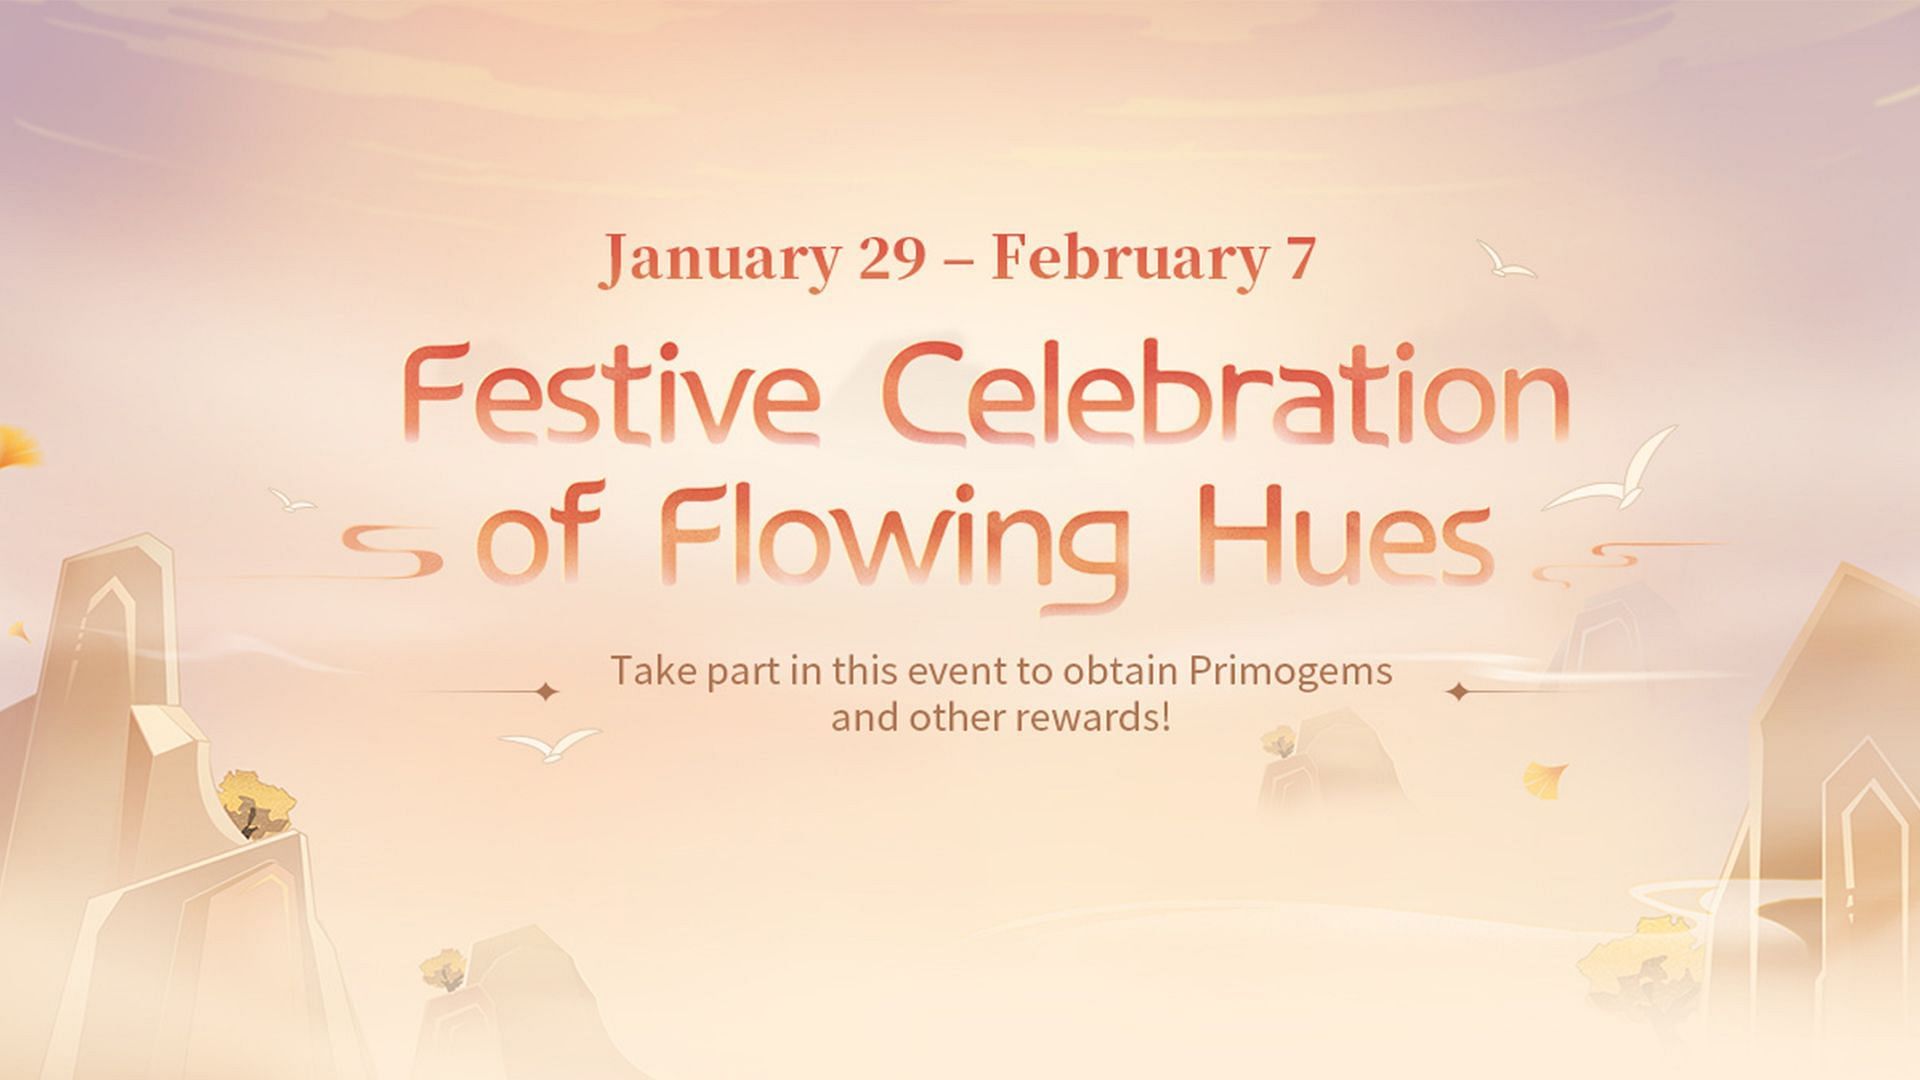 The Festive Celebration of Flowing Hues web event (Image via miHoYo)